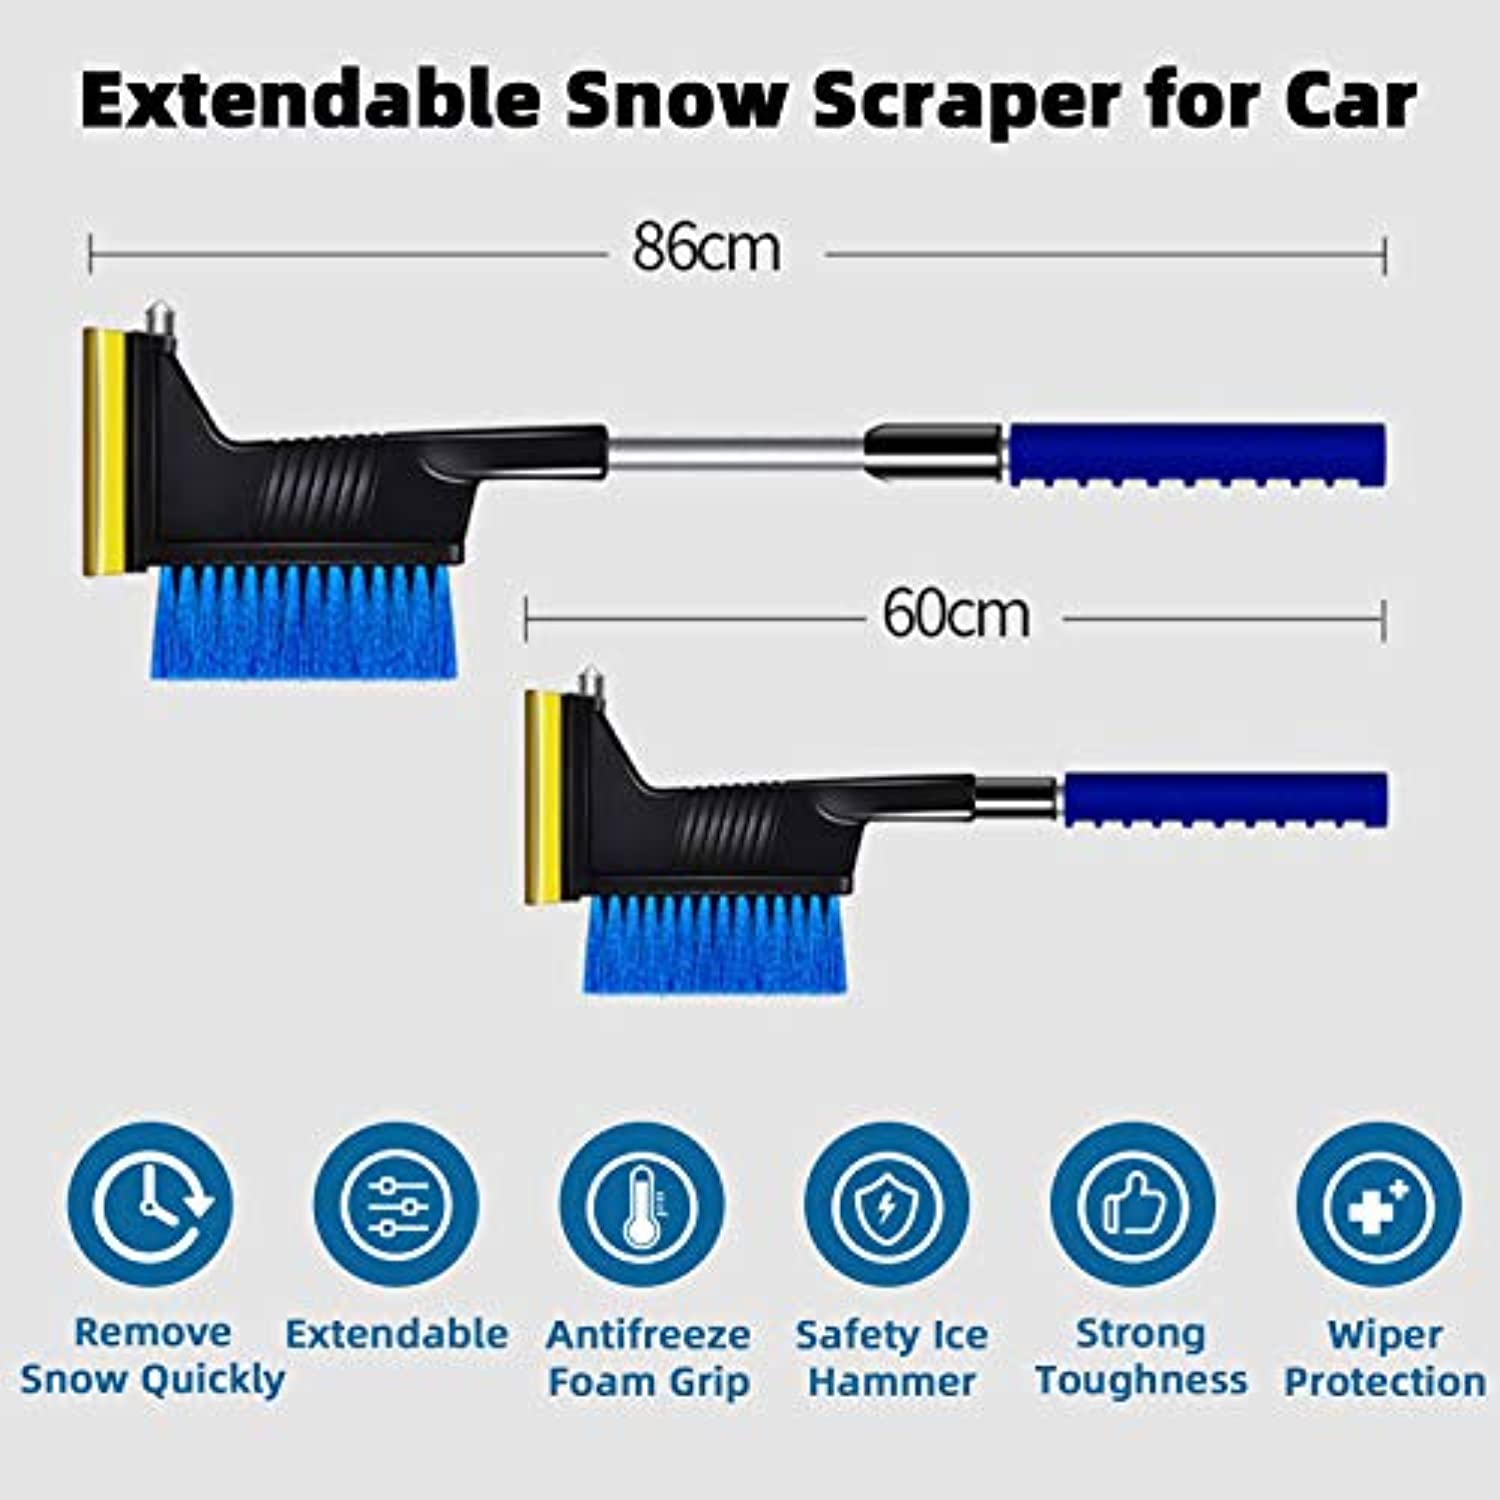 Icarscars Extendable Car Snow Brush, Ice Scraper for Car